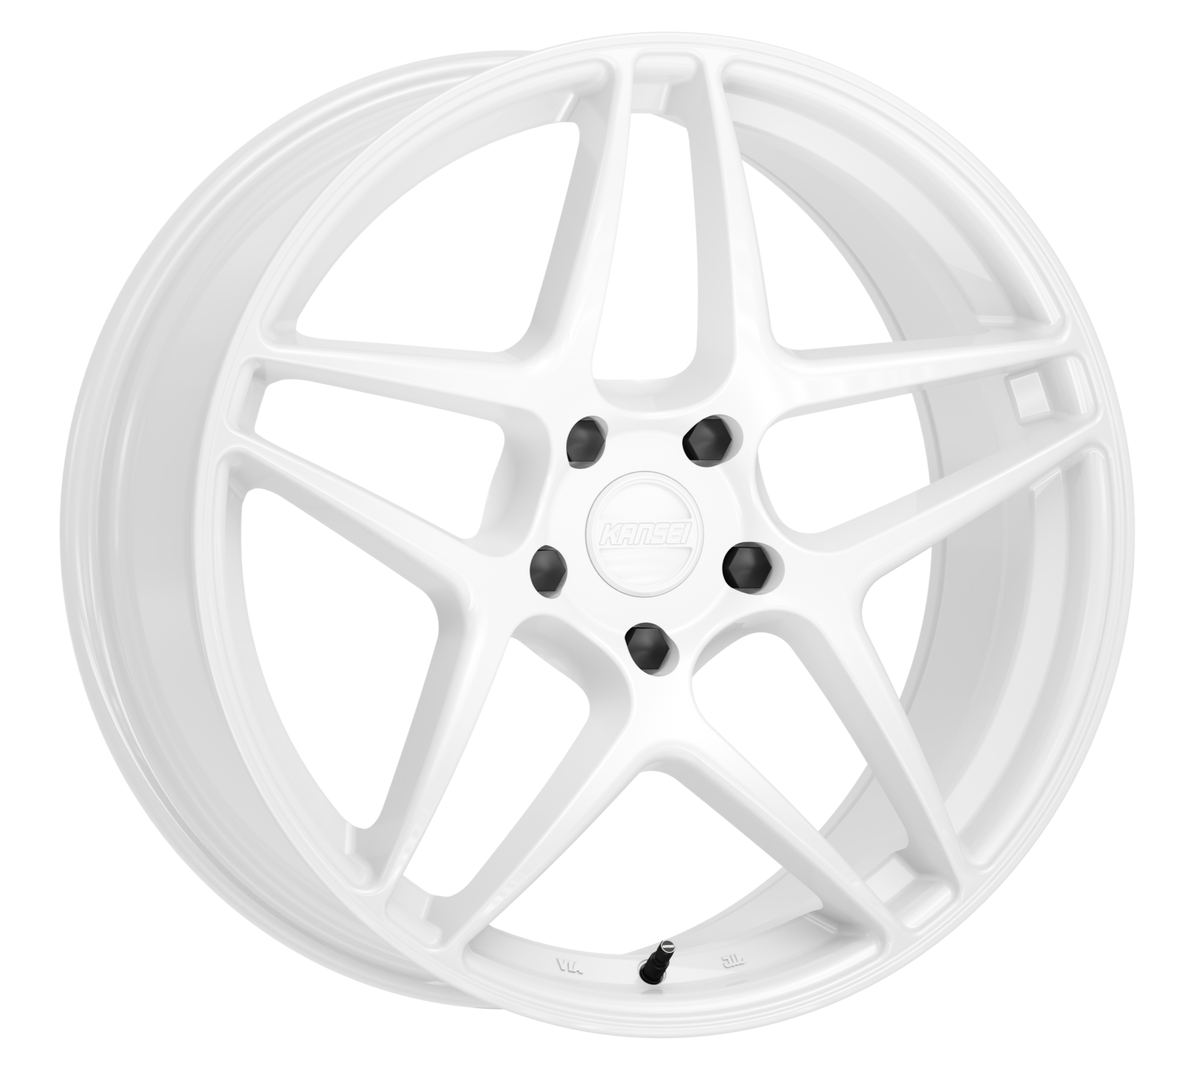 K15W ASTRO Wheel, Size: 19" x 10.50", Bolt Pattern: 5 x 114.300 mm, Backspace: 7.13" [Finish: Gloss White]